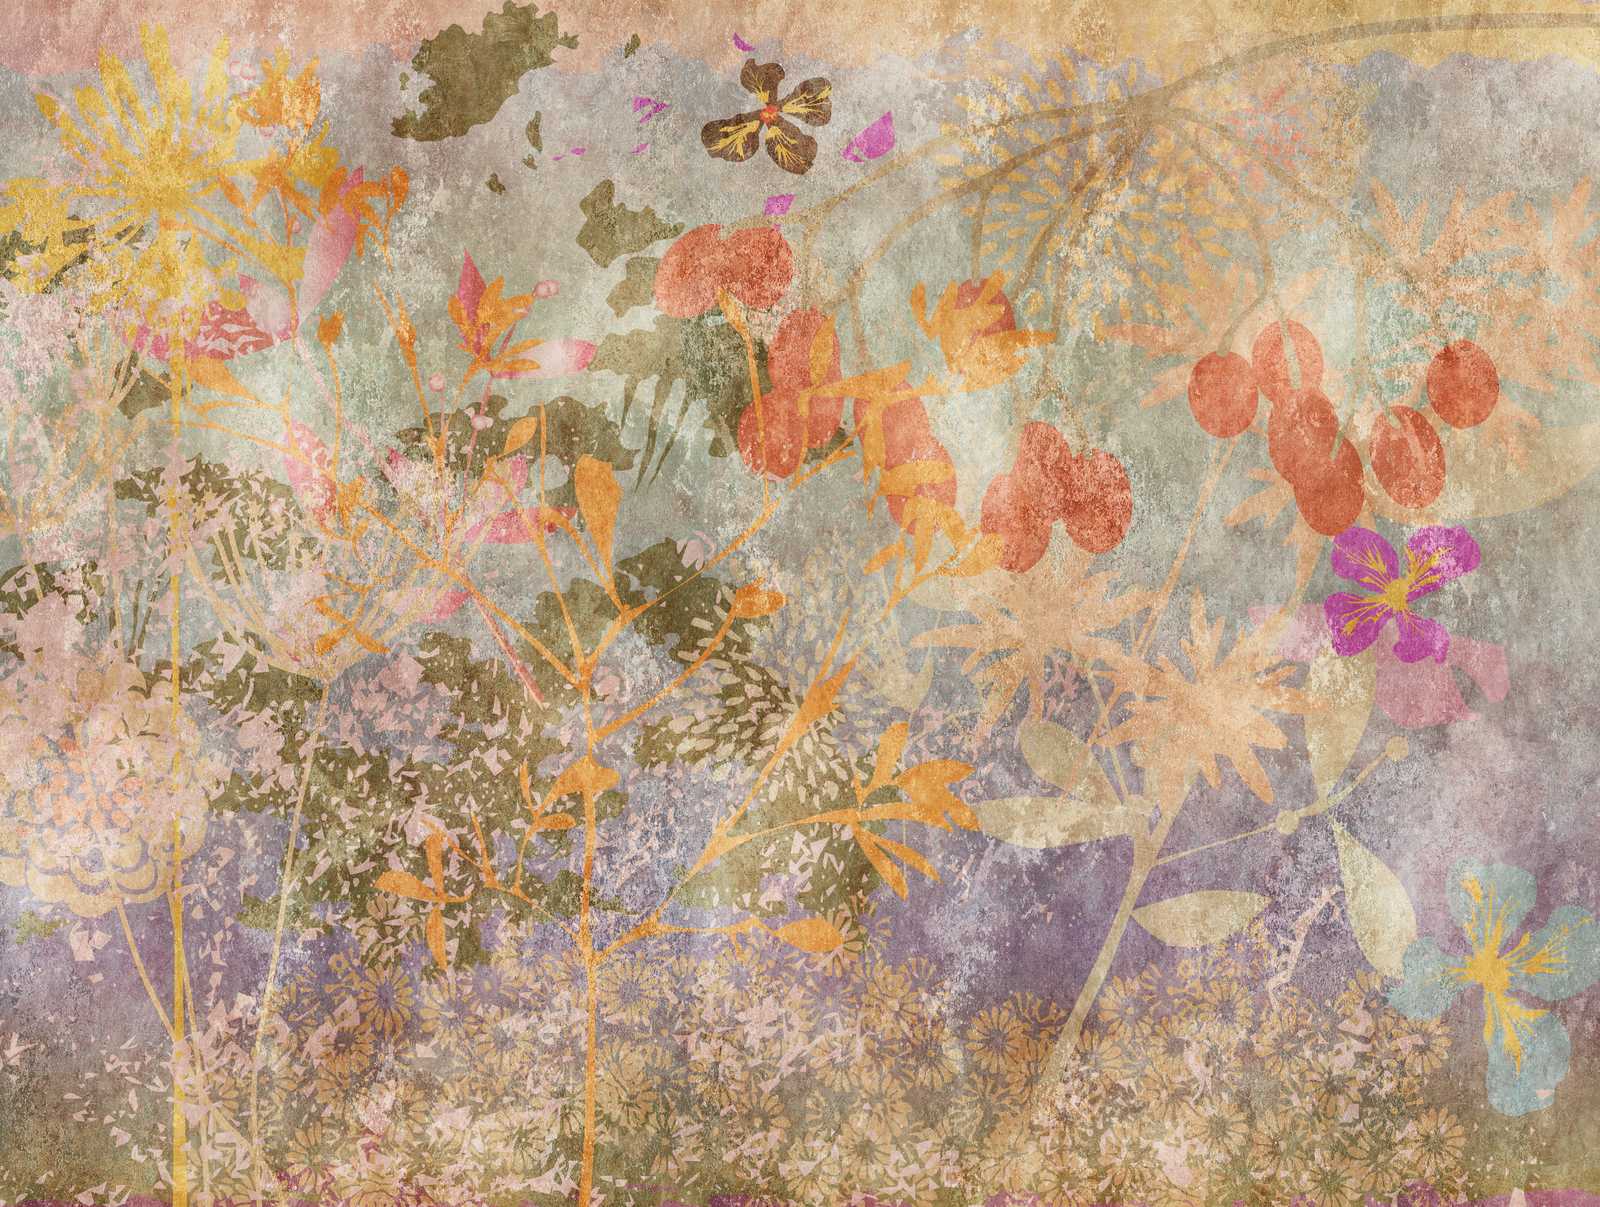             Novedades en papel pintado - motivo de flores al fresco en estilo retro
        